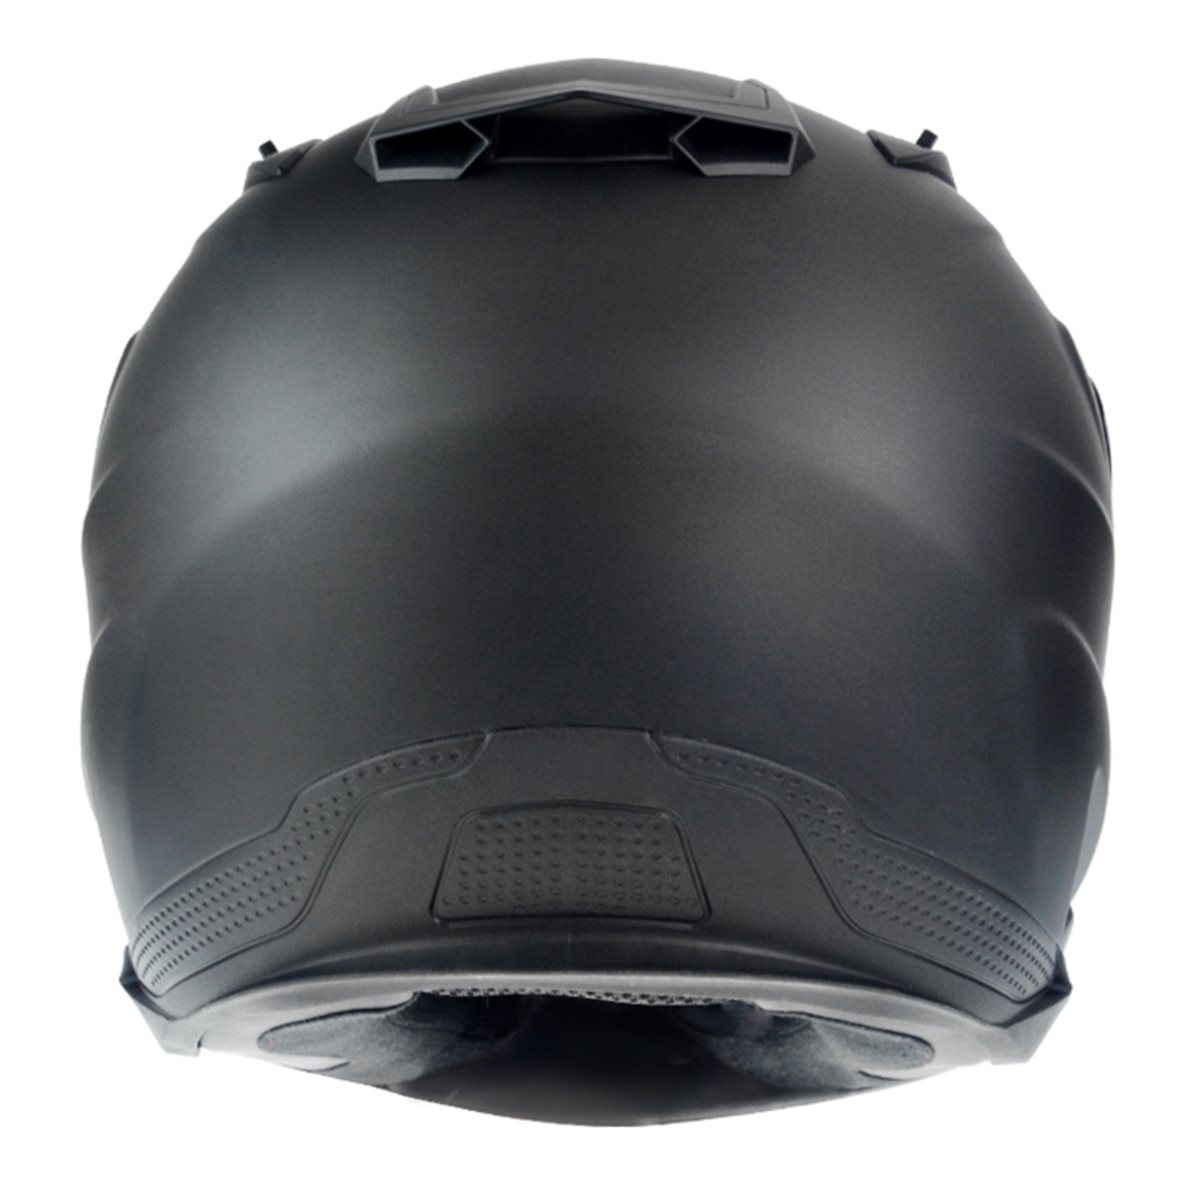 M2R 騎乘機車用全罩式防護頭盔 M-3 消光黑